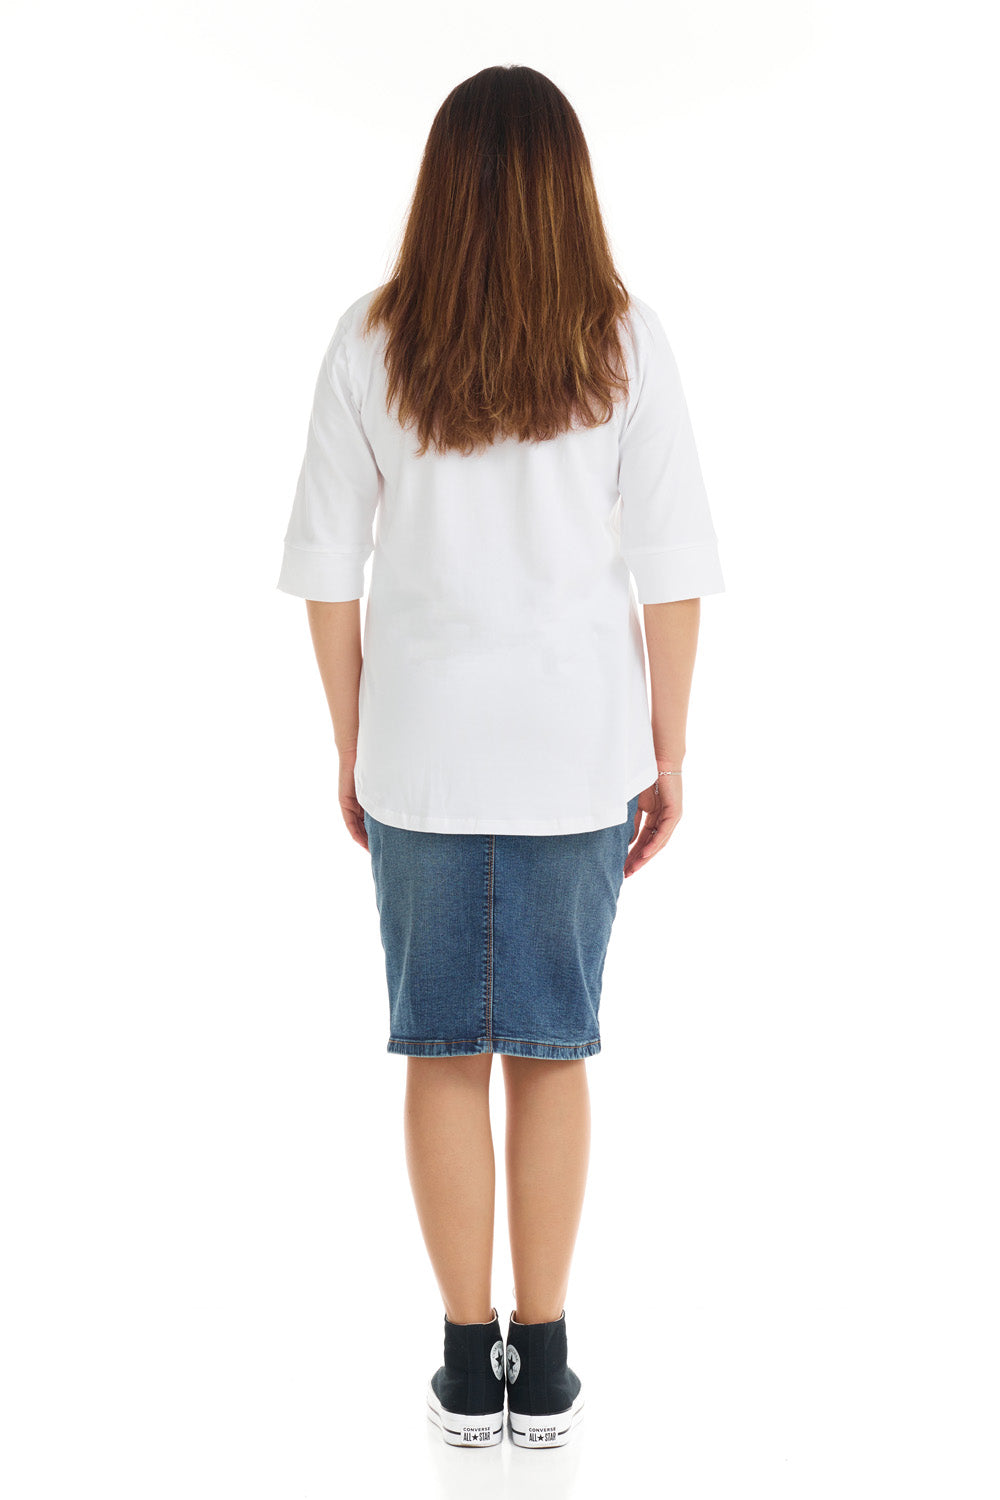 white 3/4 cuff sleeve tshirt for women